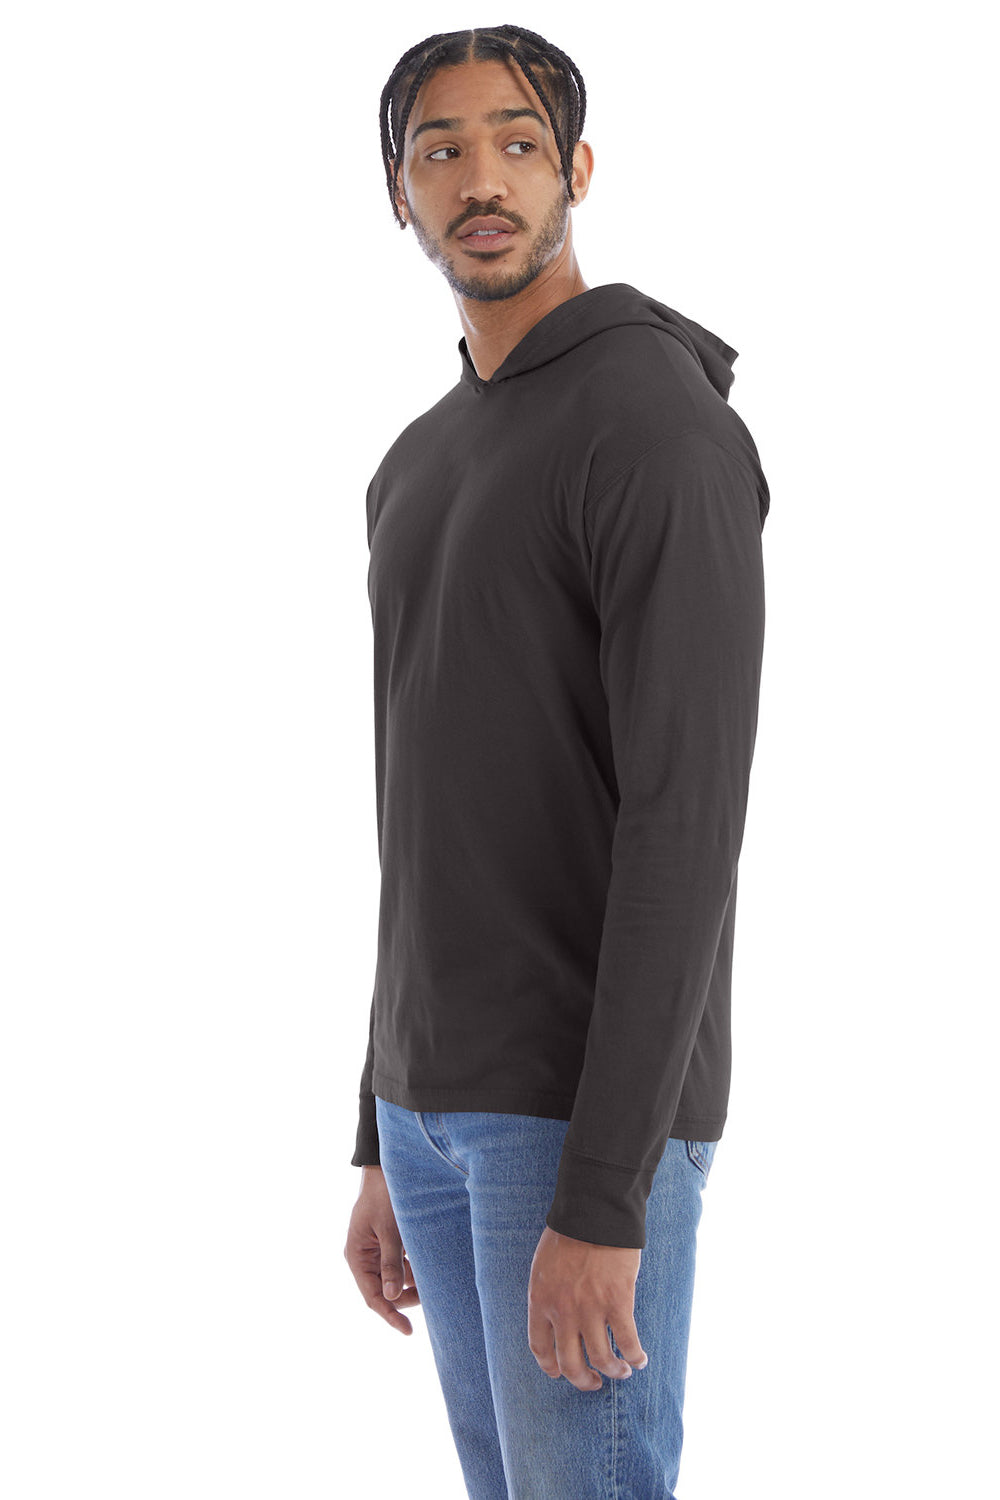 ComfortWash by Hanes GDH280 Mens Jersey Long Sleeve Hooded T-Shirt Hoodie New Railroad 3Q